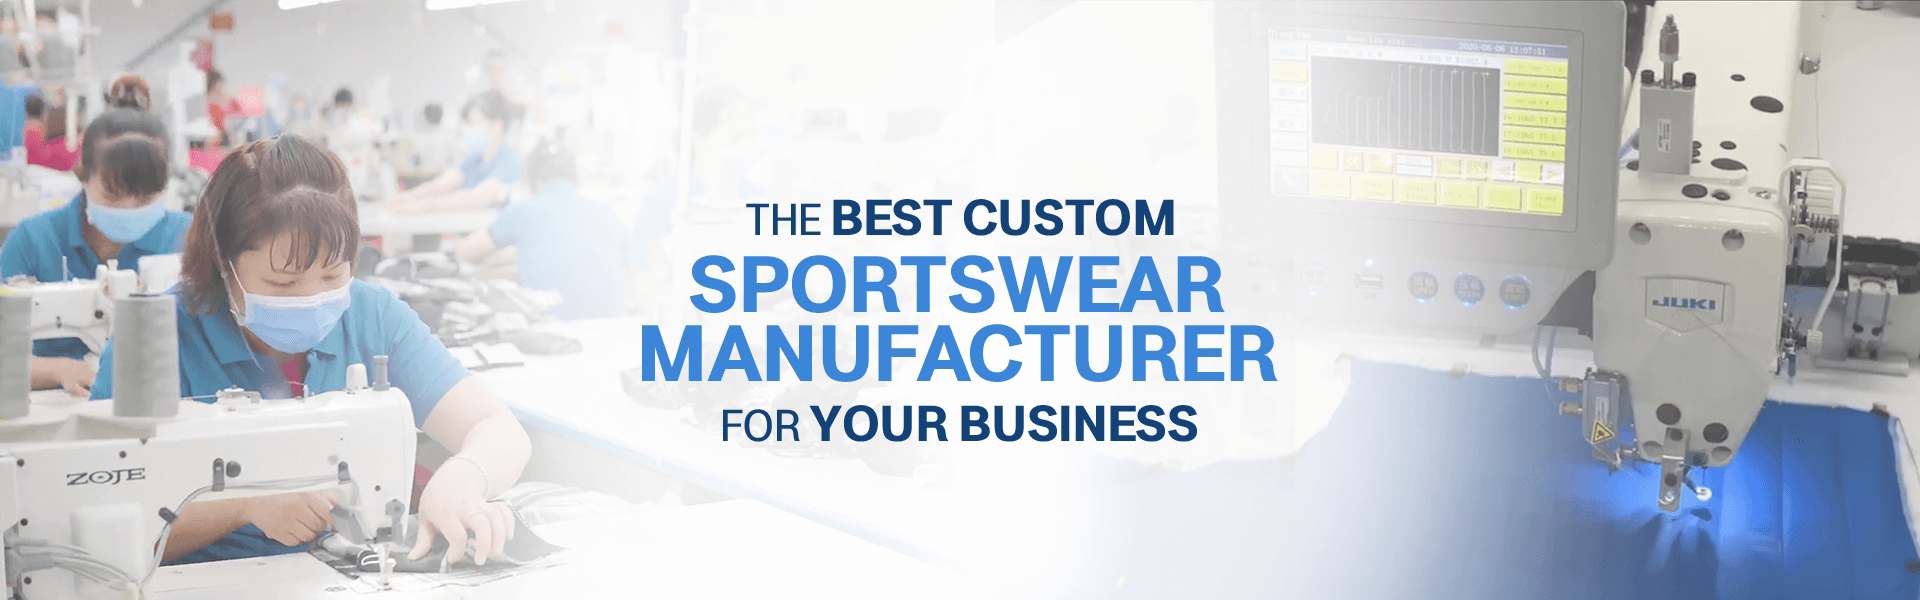 Sportswear Manufacturer, Custom Sportswear Manufacturer